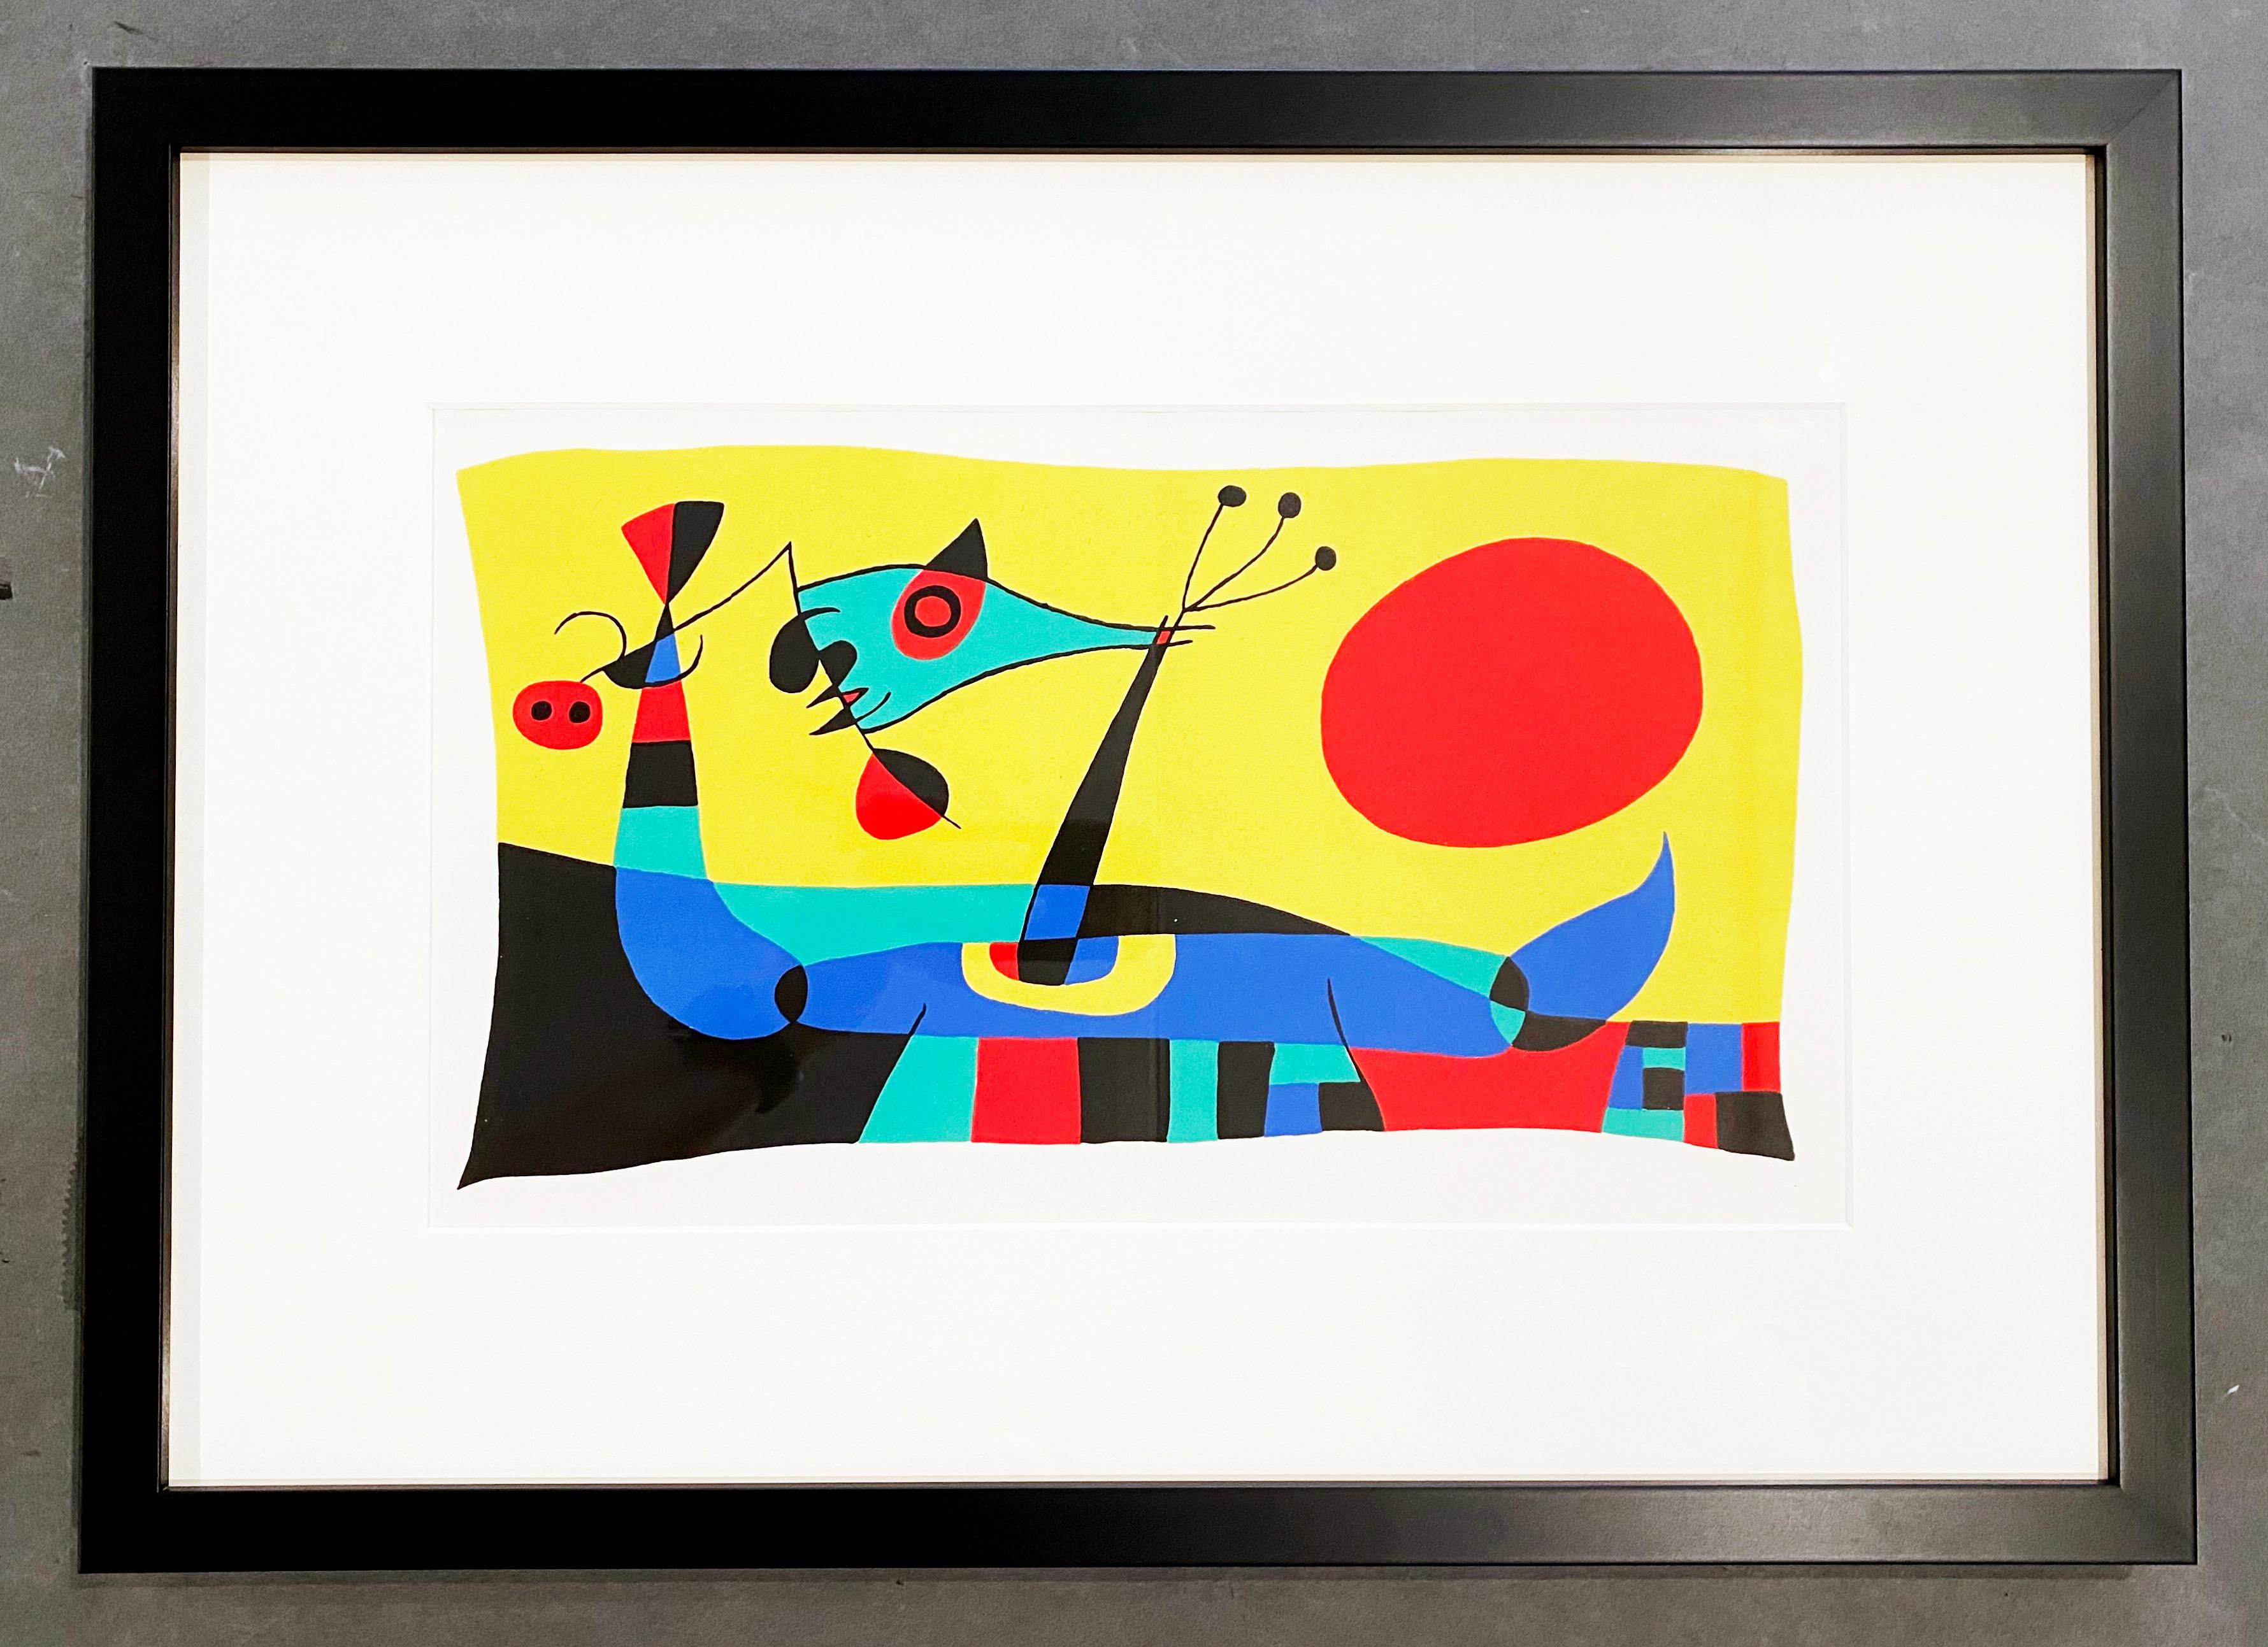 Joan Miro (Plate 2) - Abstract Print by Joan Miró